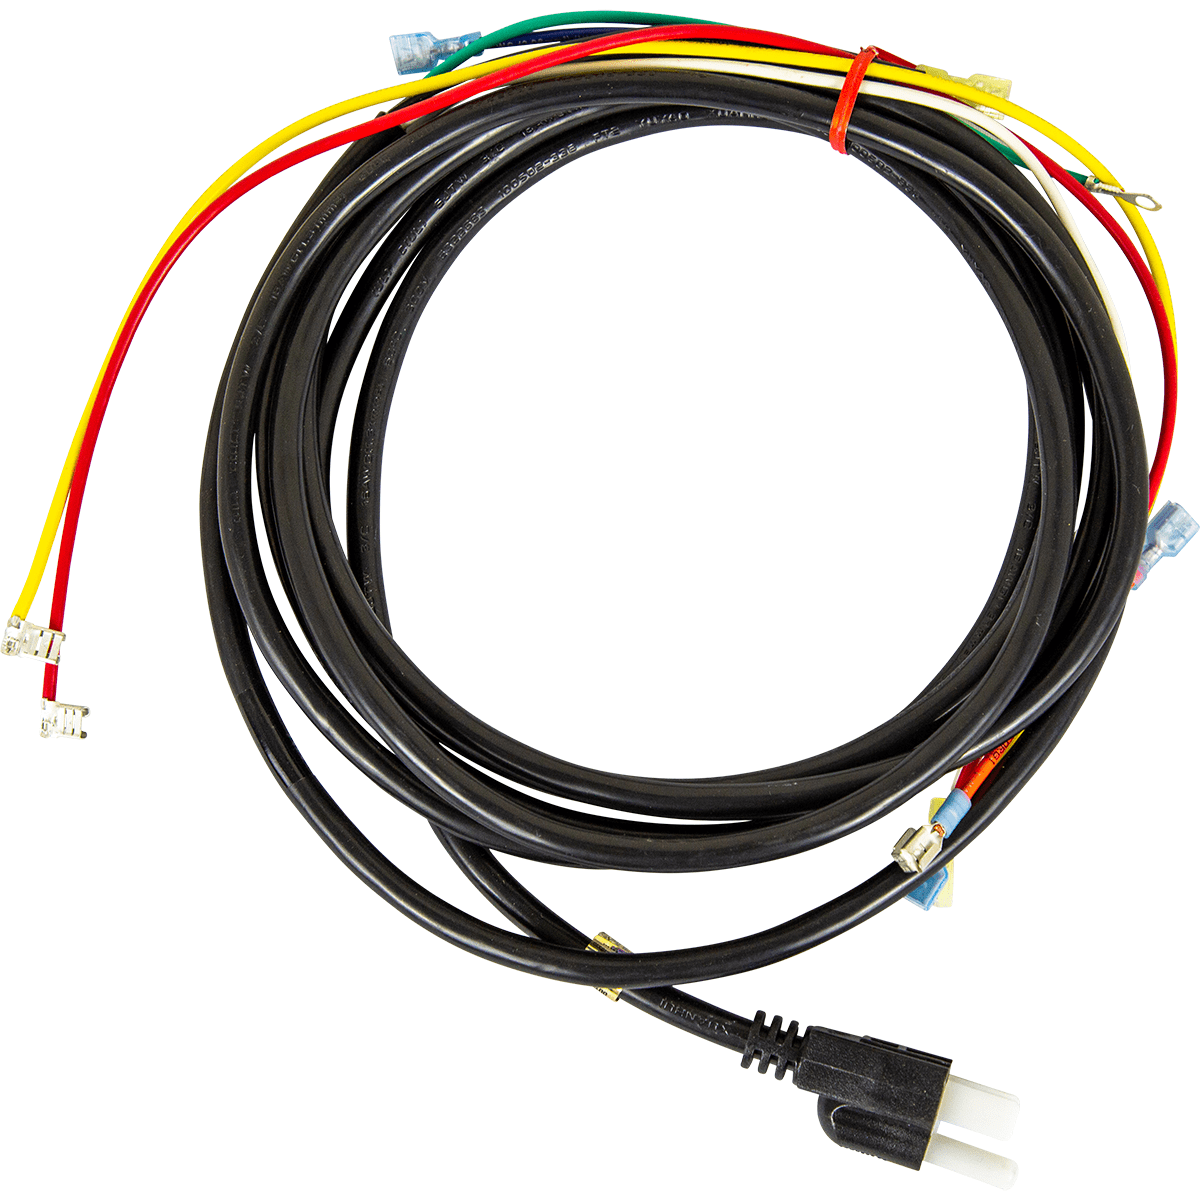 Santa Fe Replacement Cord & Wire Harness For Classic Dehumidifier (4021409)